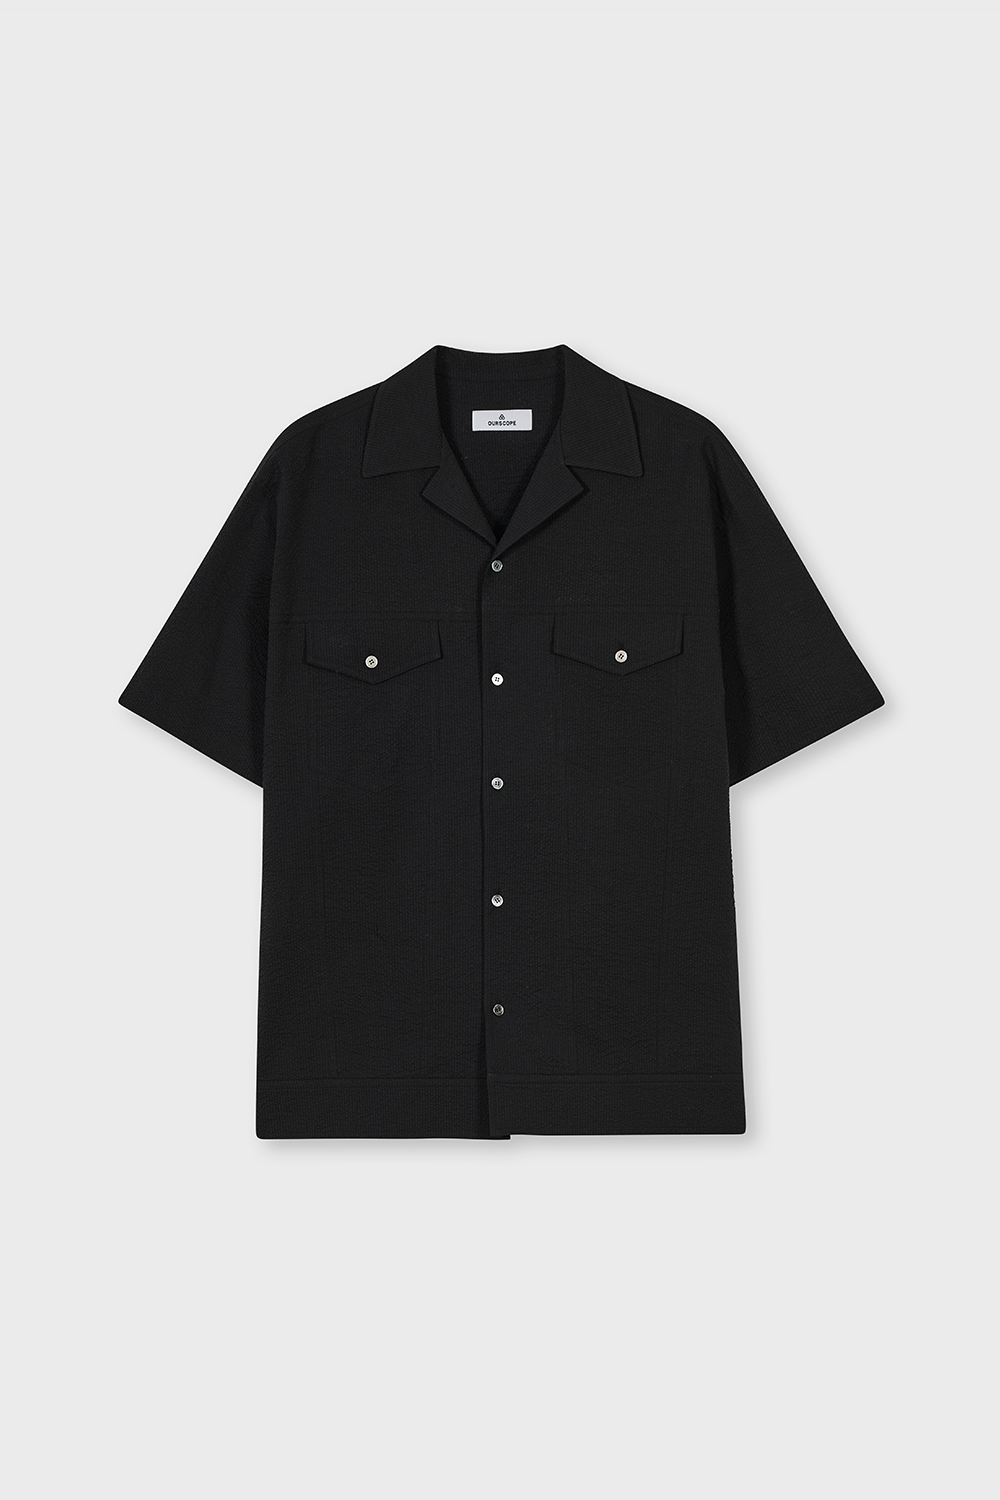 Cuban Trucker Half Shirts (Seersucker Black)